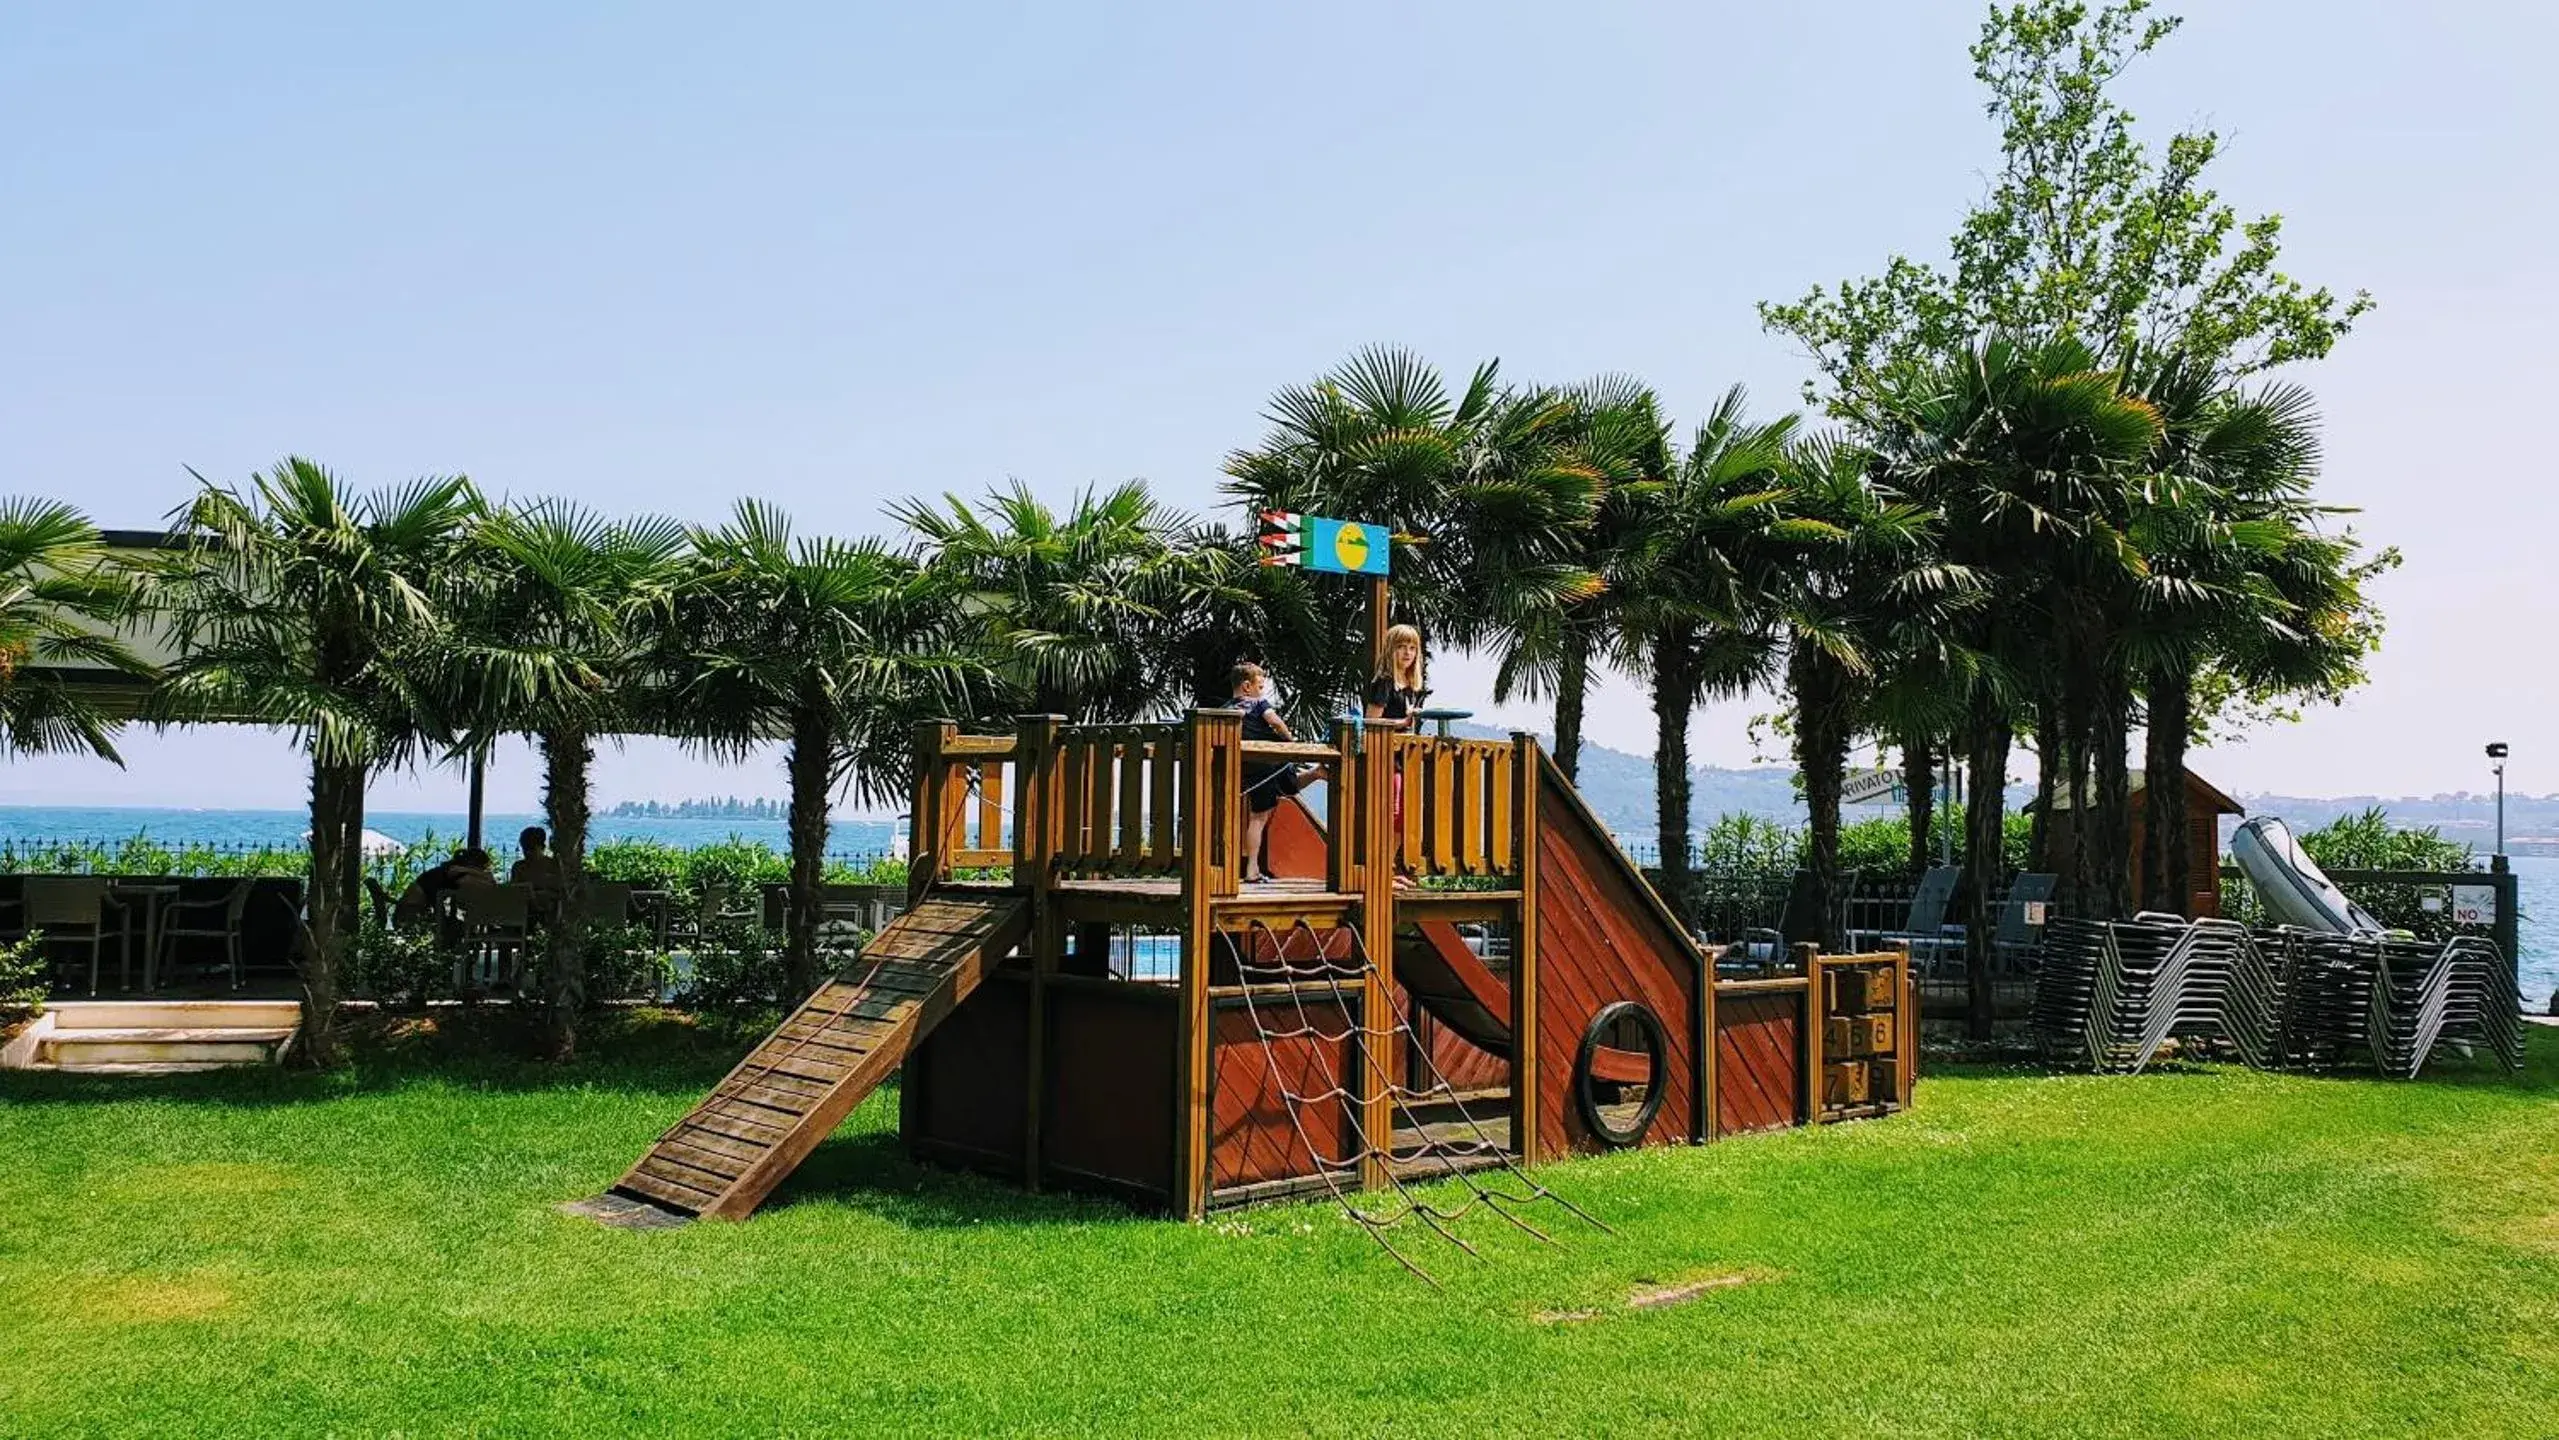 Children play ground, Children's Play Area in Residence Villalsole